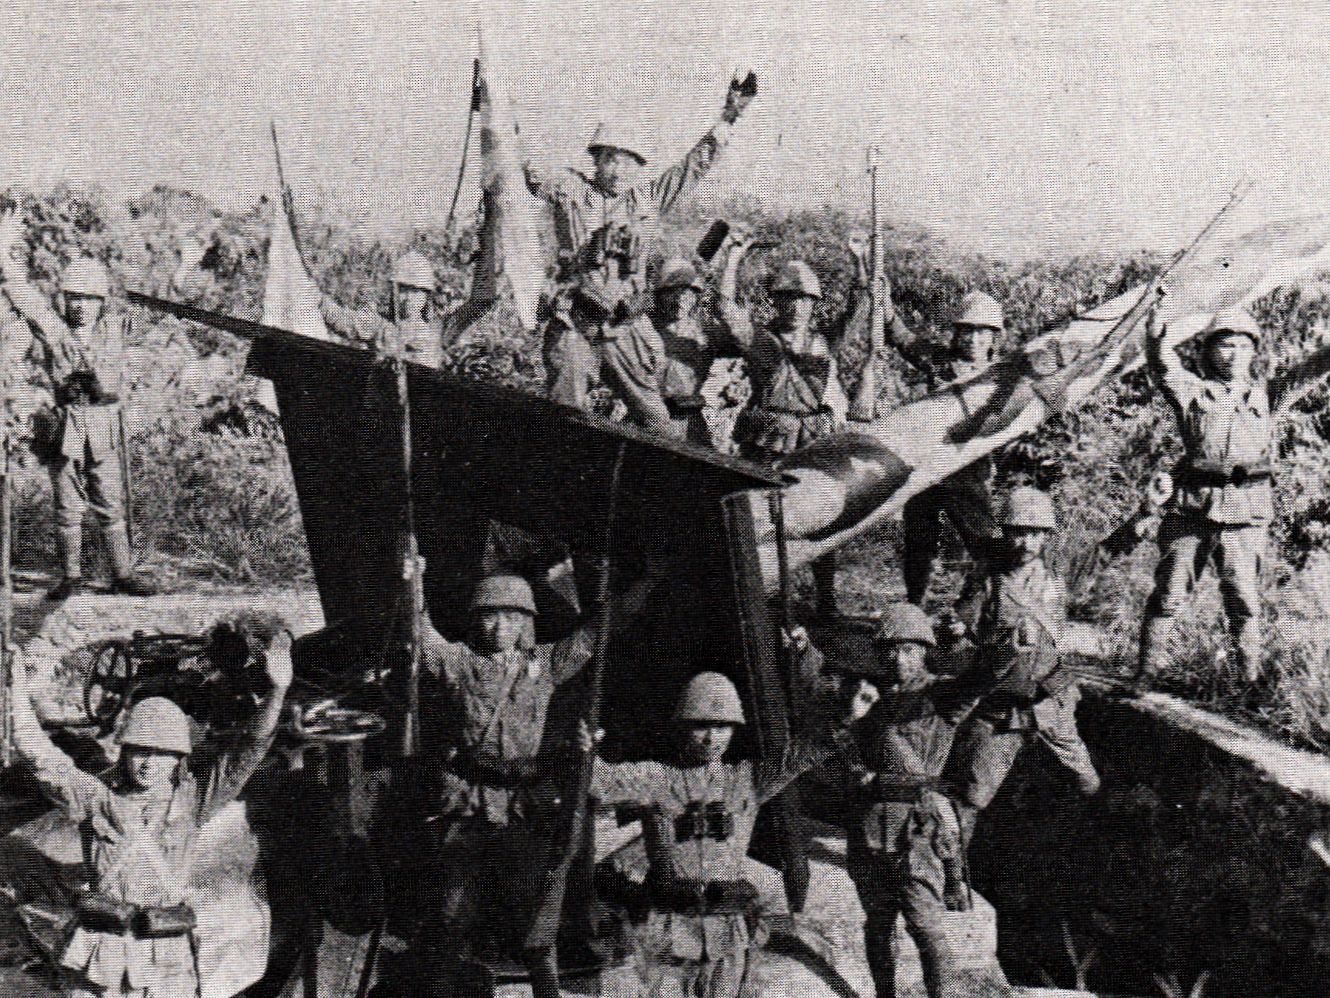 Japanese arrive on the island - Feb 1942 - IWM